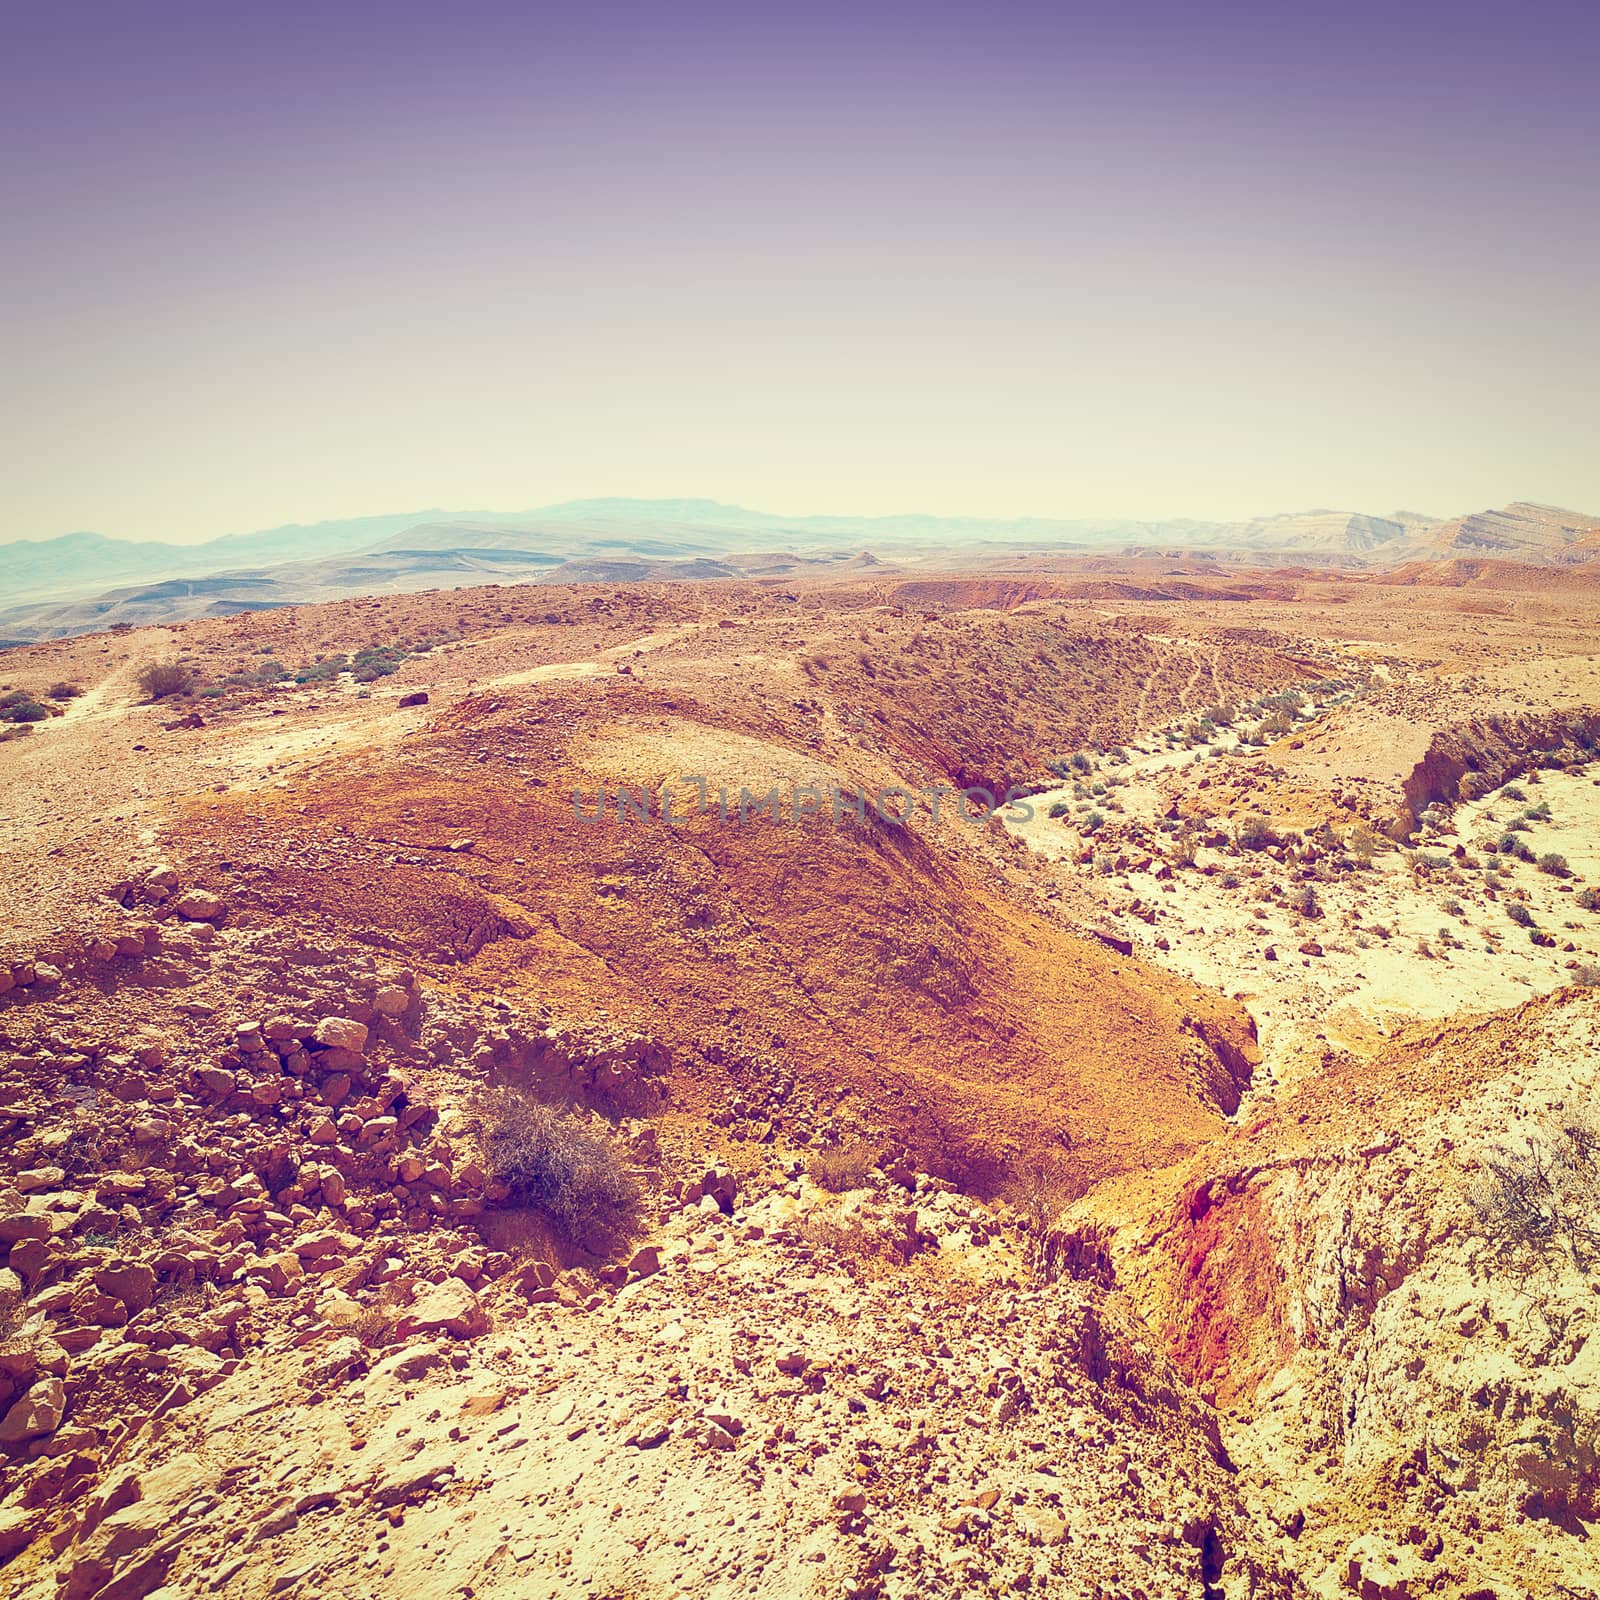 Rocky Hills of the Negev Desert in Israel at Sunset, Instagram Effect